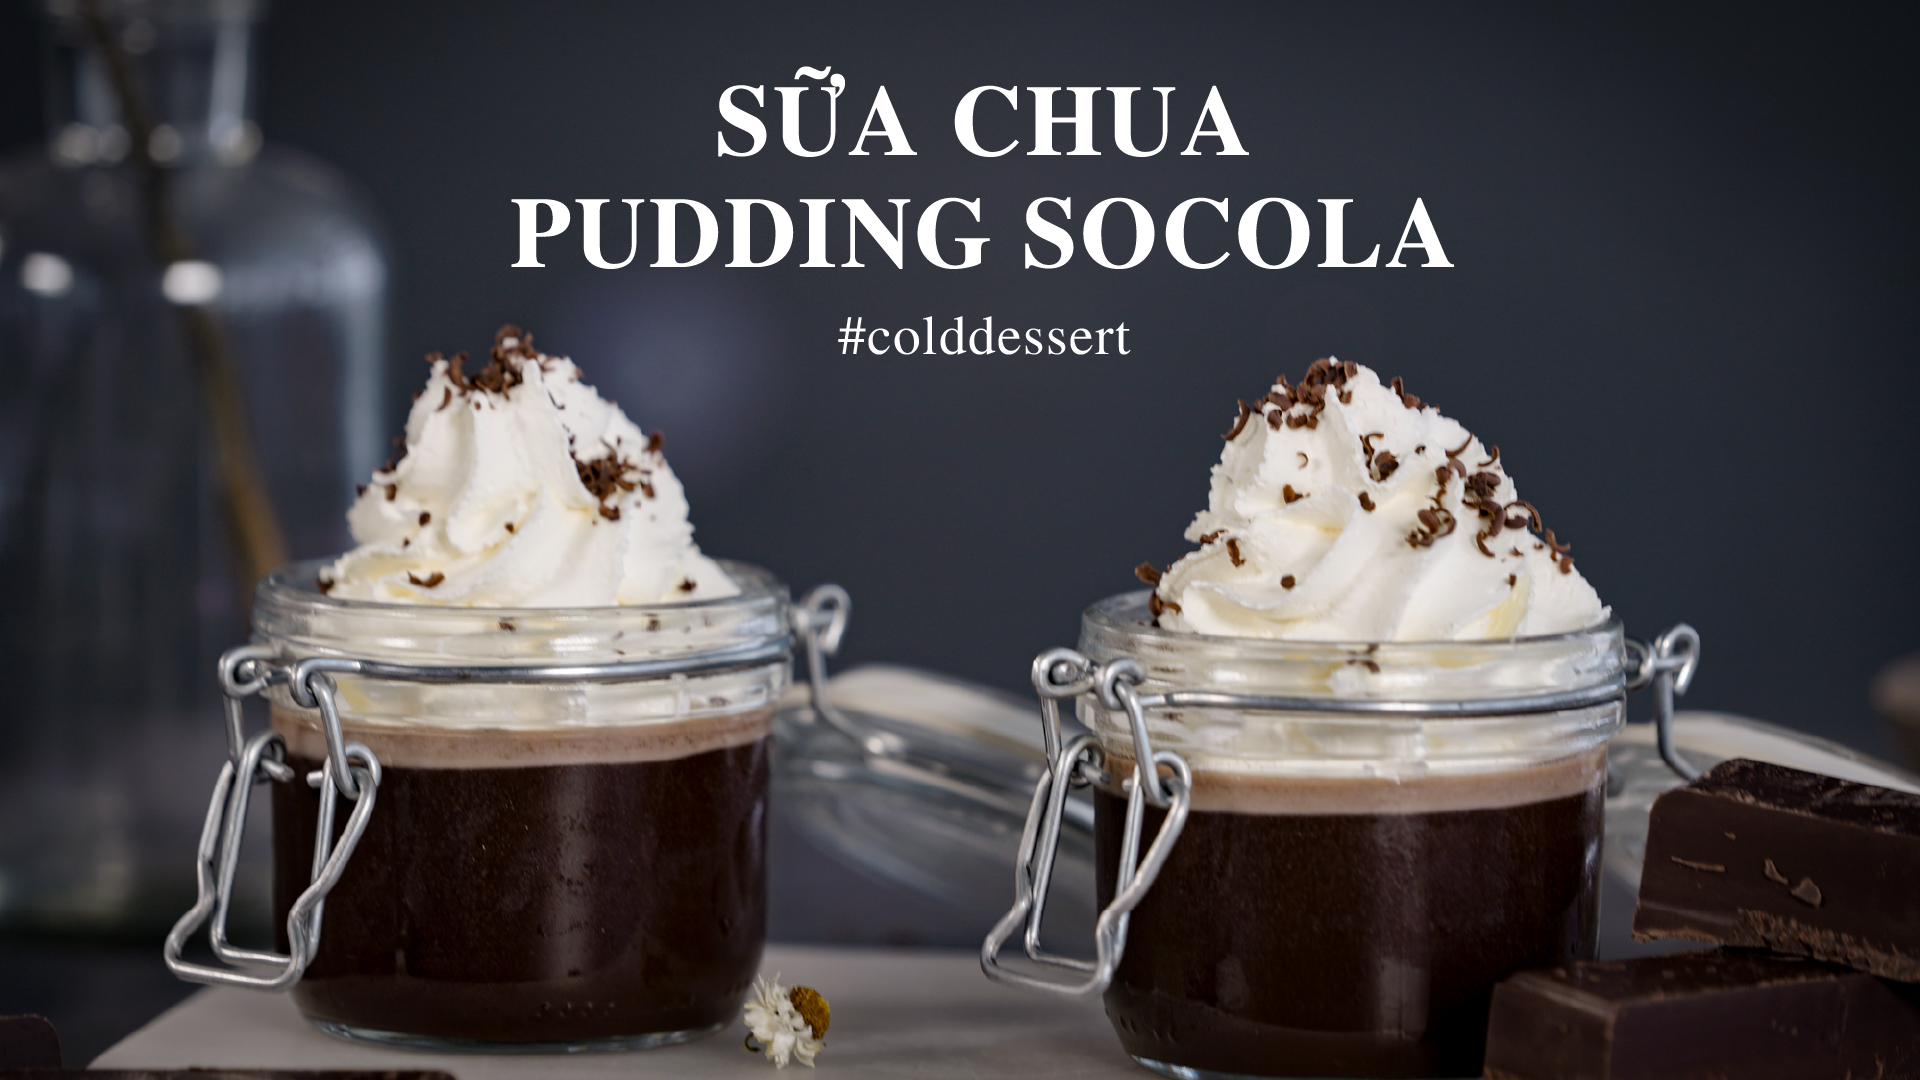 Pudding Socola